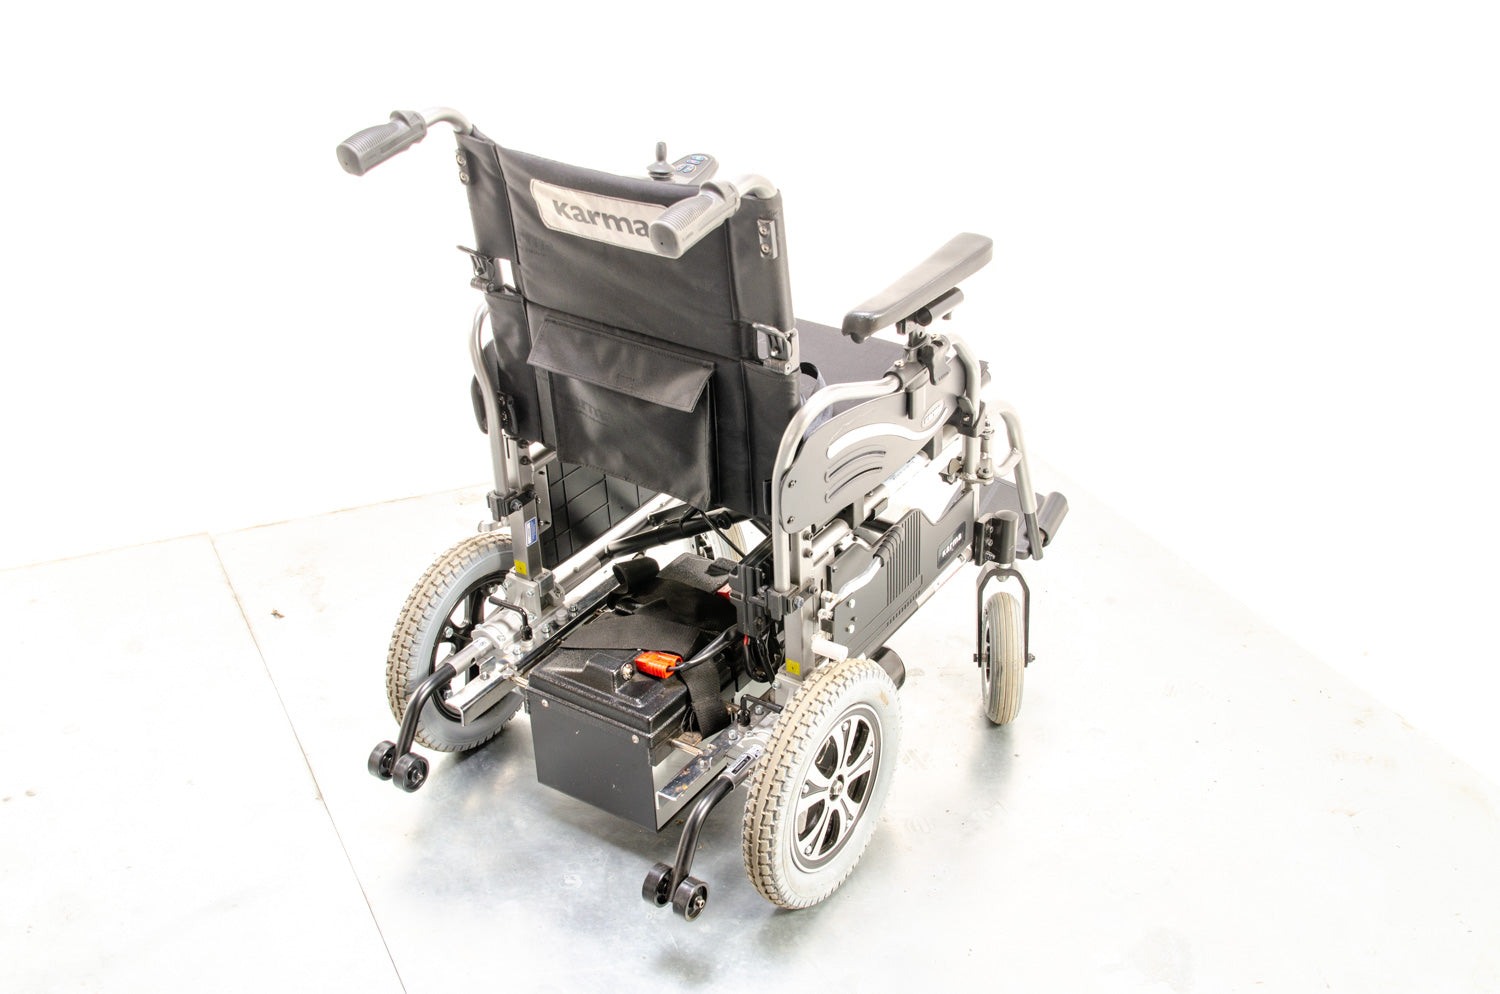 Karma Falcon Transportable Used Electric Wheelchair Powerchair Portable 03611